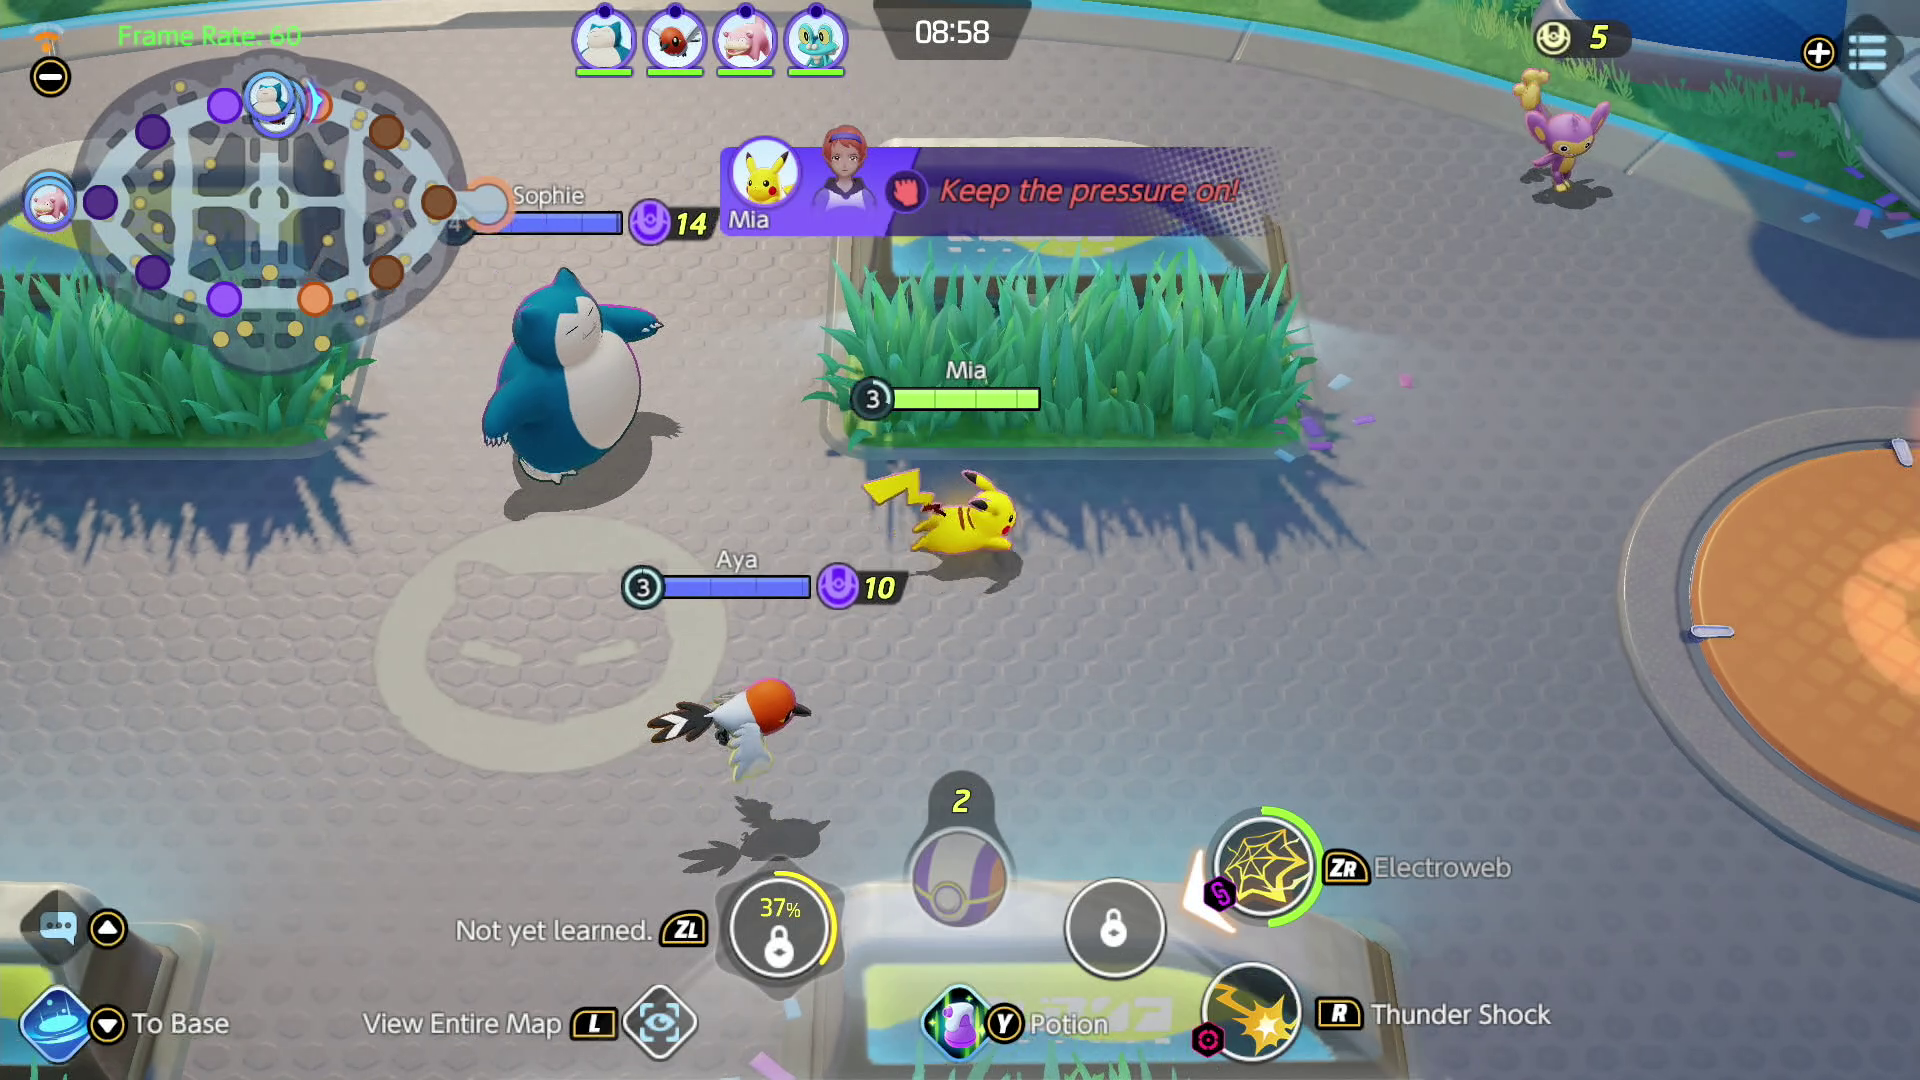 Screenshot of Pokemon characters racing across a battlefield